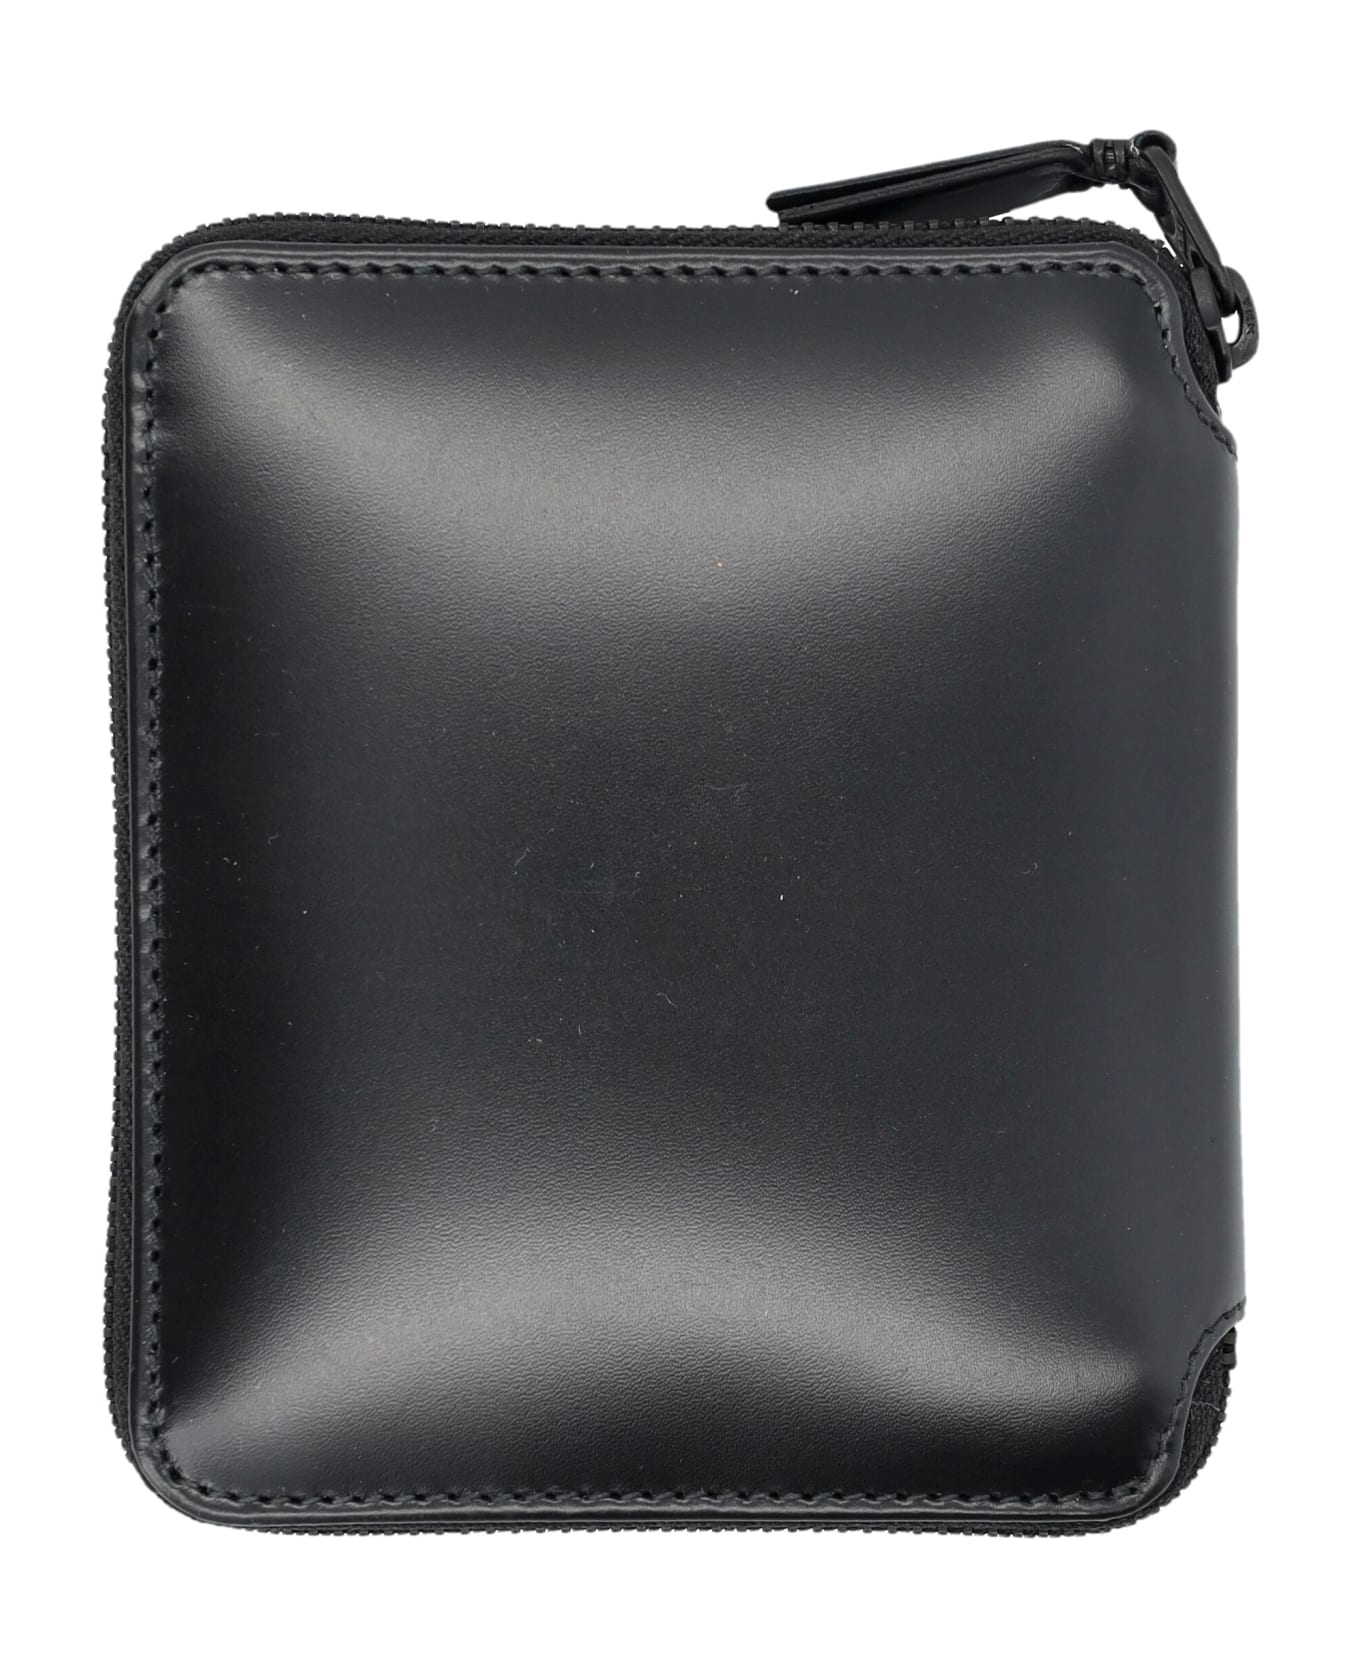 Comme des Garçons Wallet Very Black Vertical Zip Around Wallet - BLACK 財布